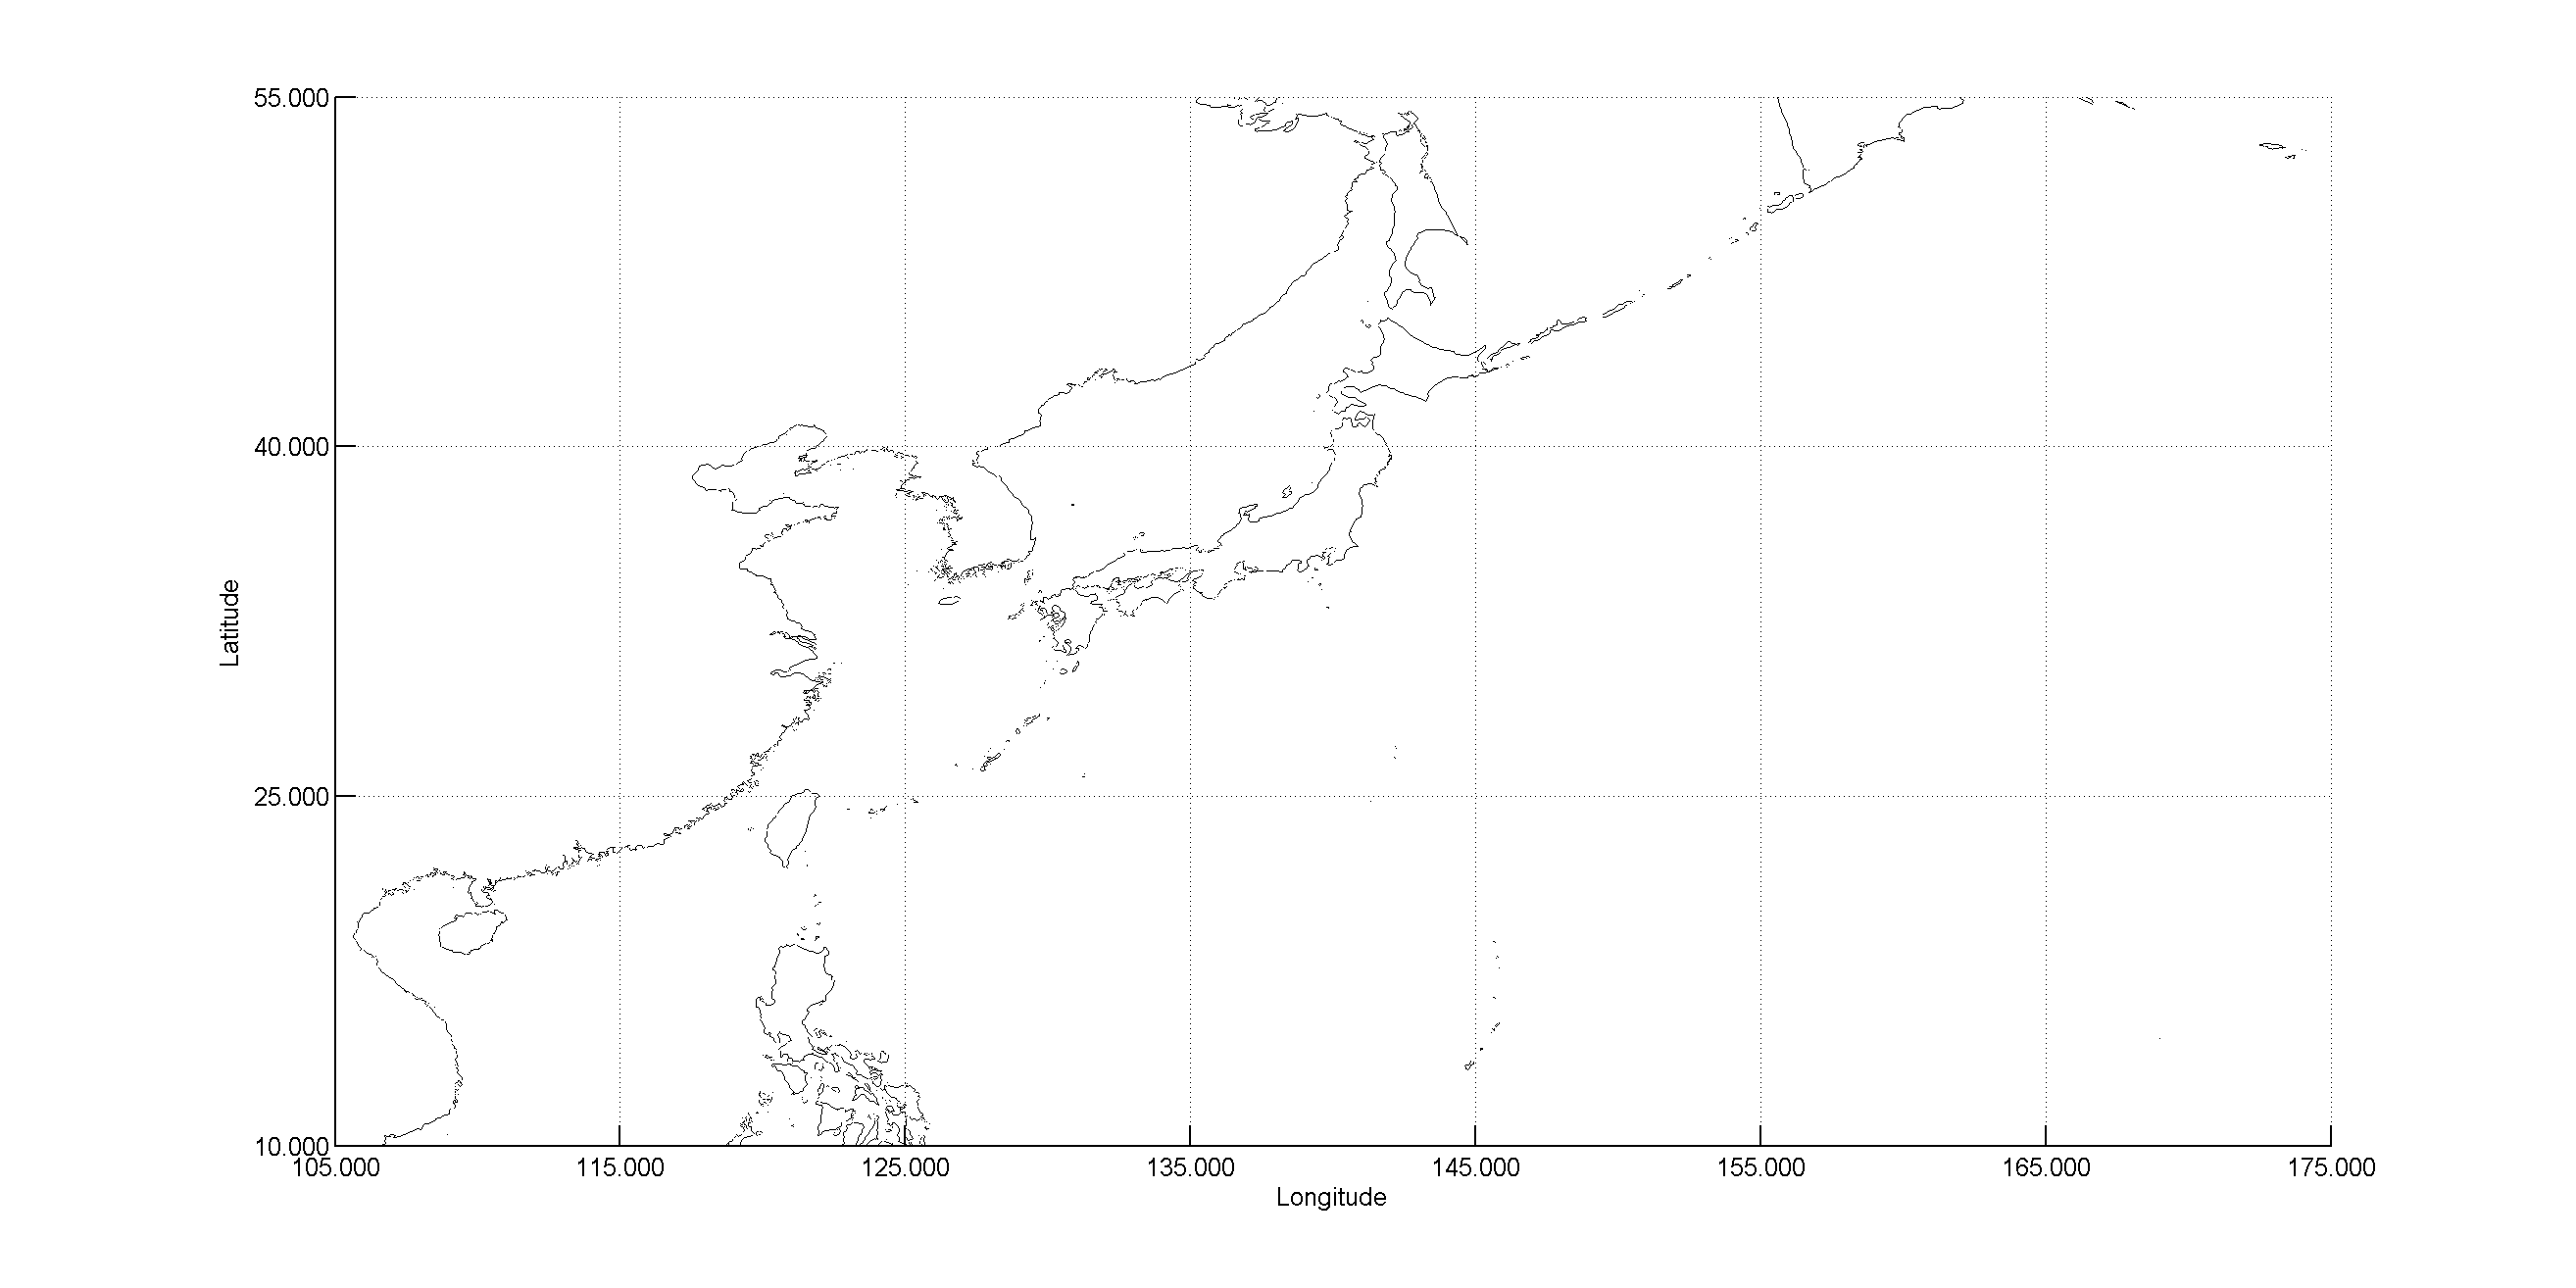 CYCLE_169 - Japan Descending passes